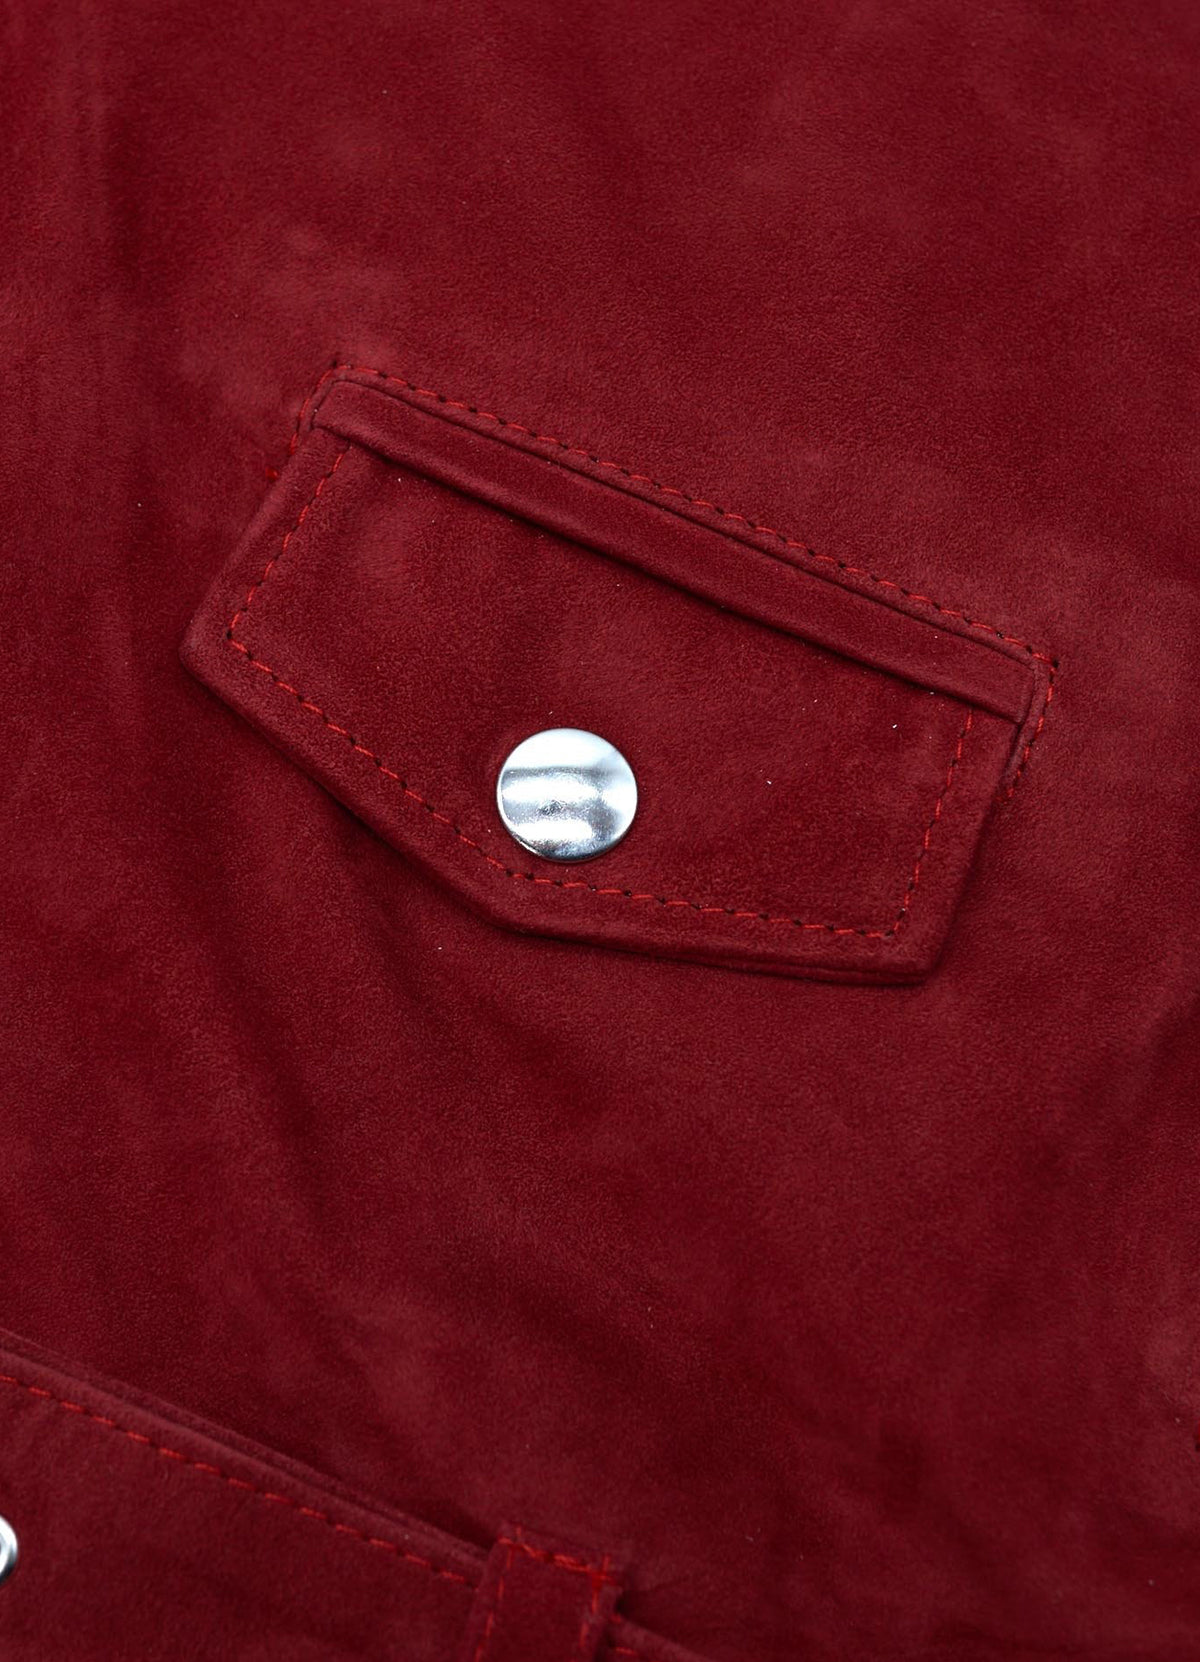 Mens Burgendy Red Suede Leather Jacket | Elite Jacket